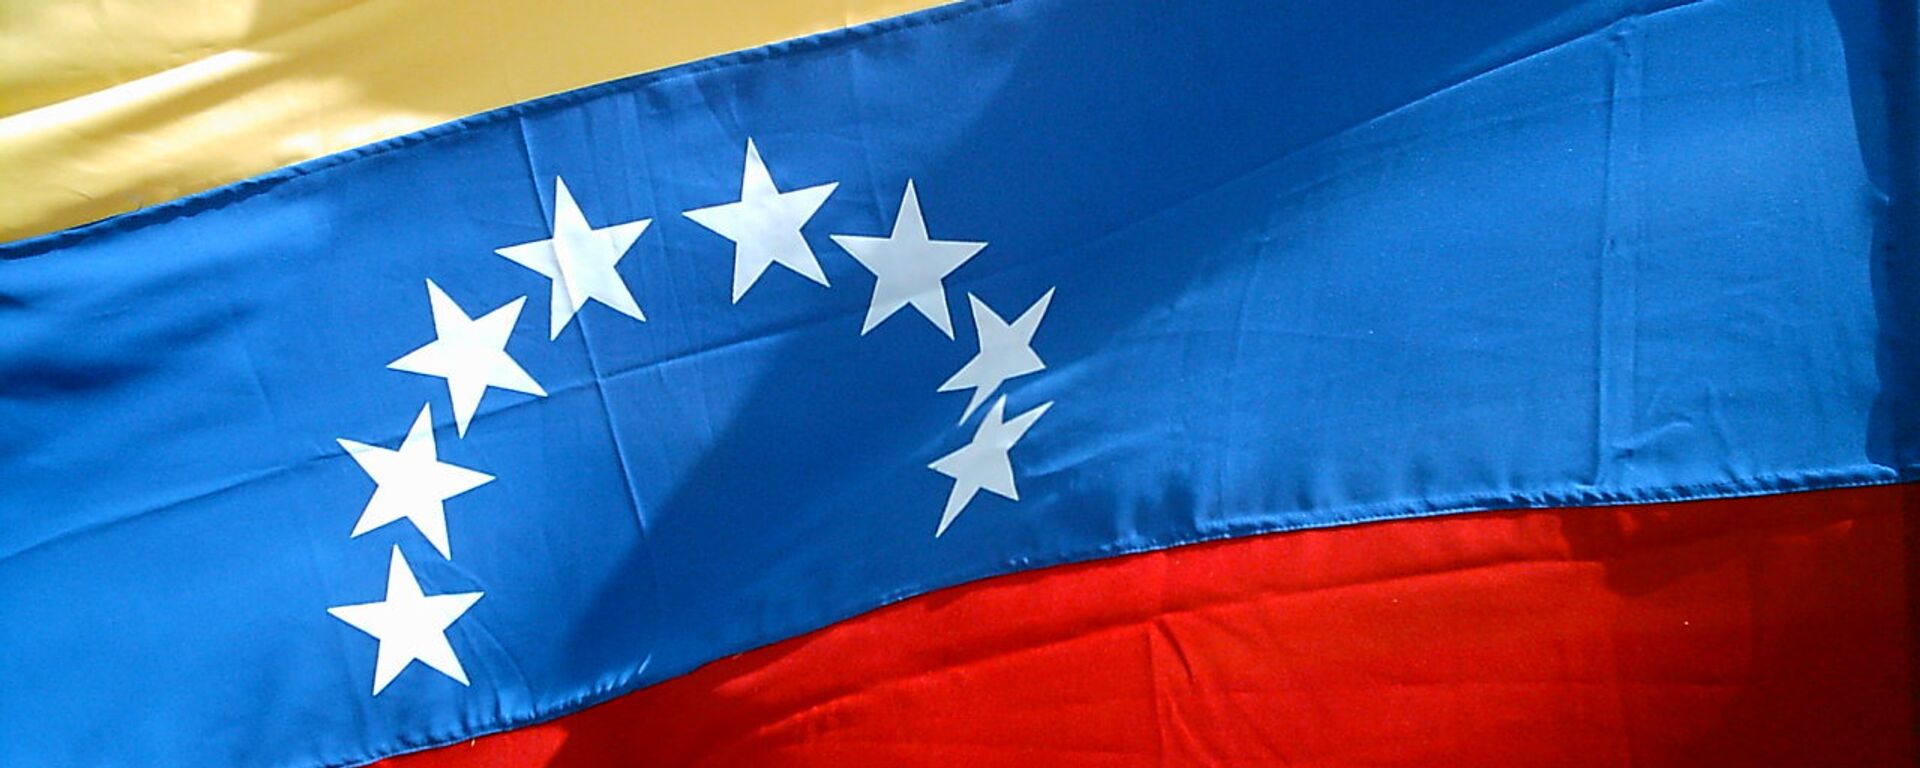 Bandera de Venezuela - Sputnik Mundo, 1920, 31.01.2021